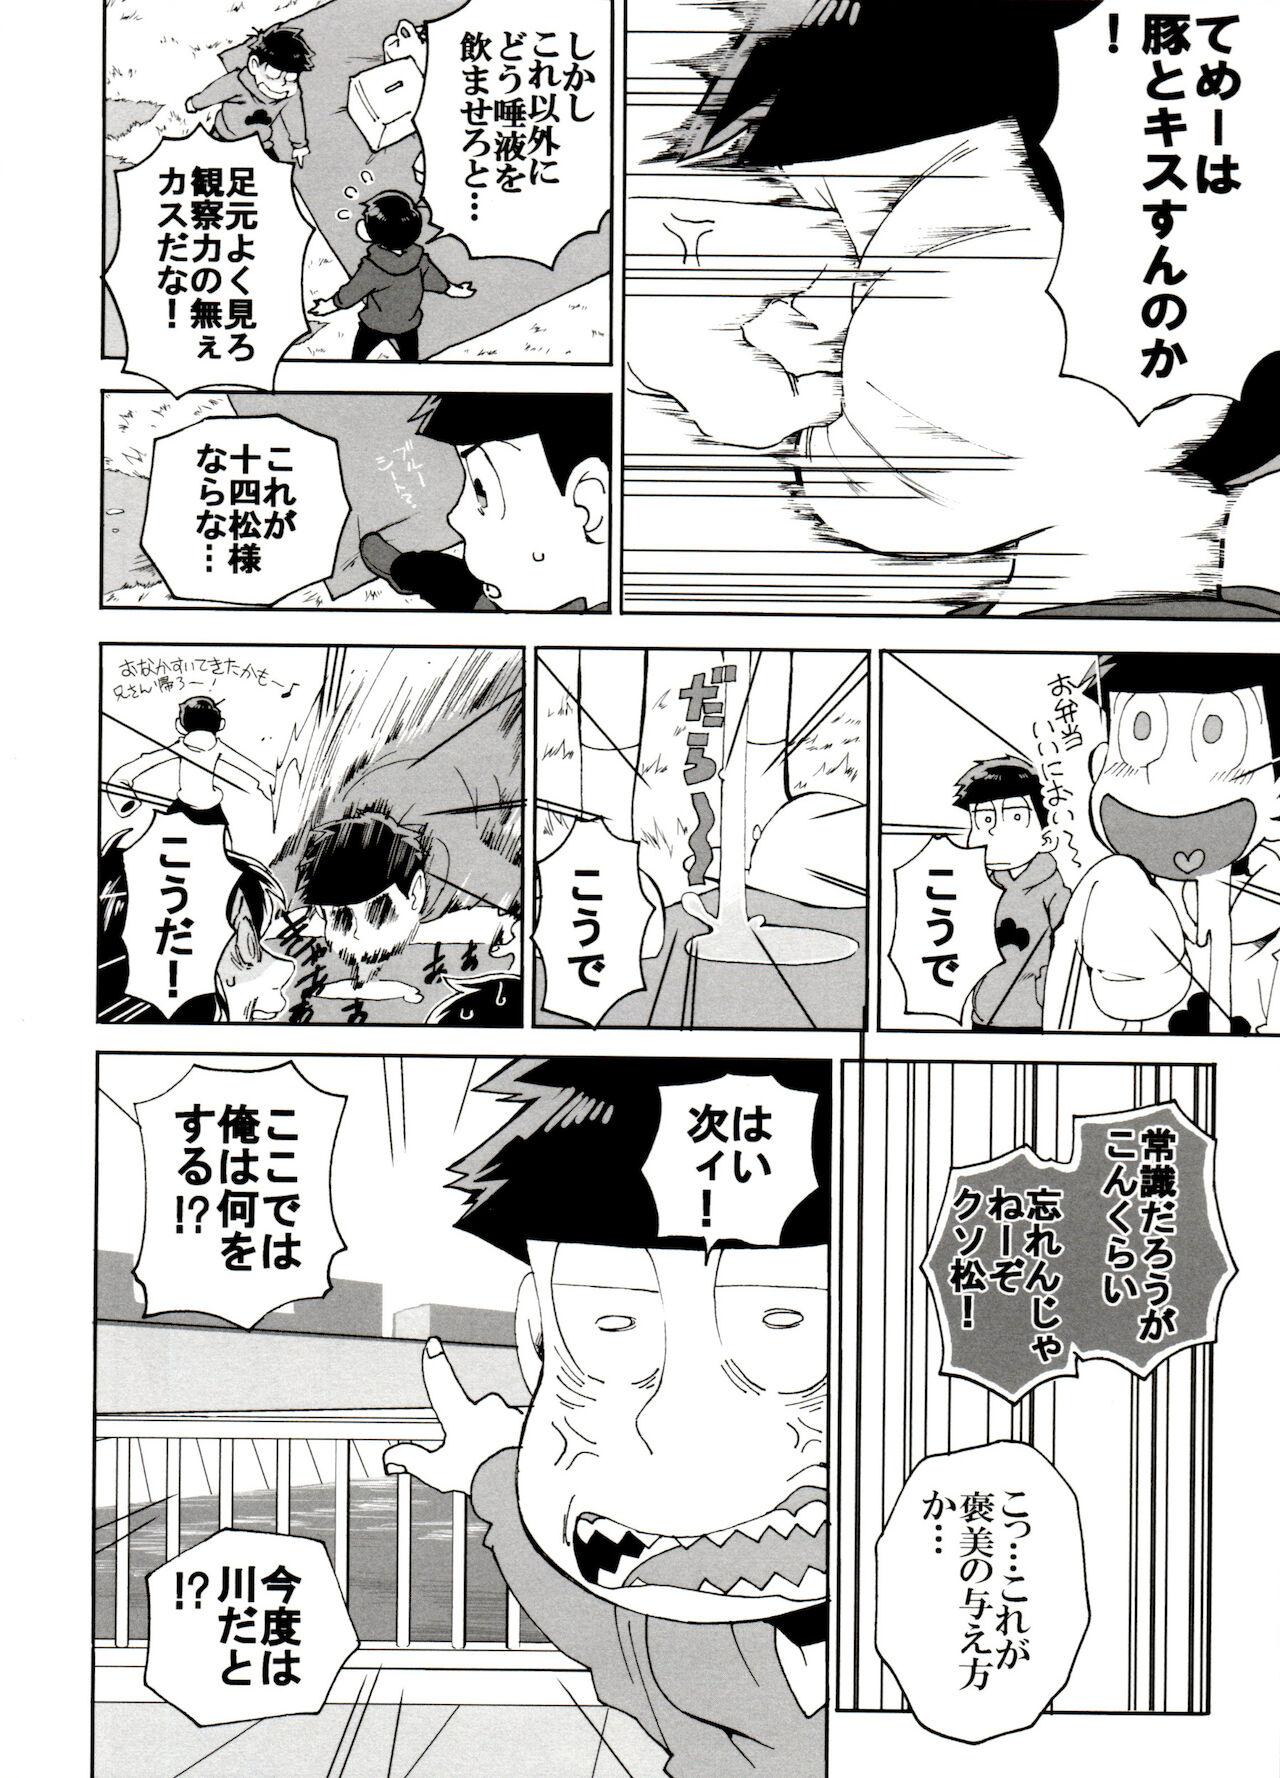 Maledom SM Matsu 2 - Osomatsu-san Fishnet - Page 10